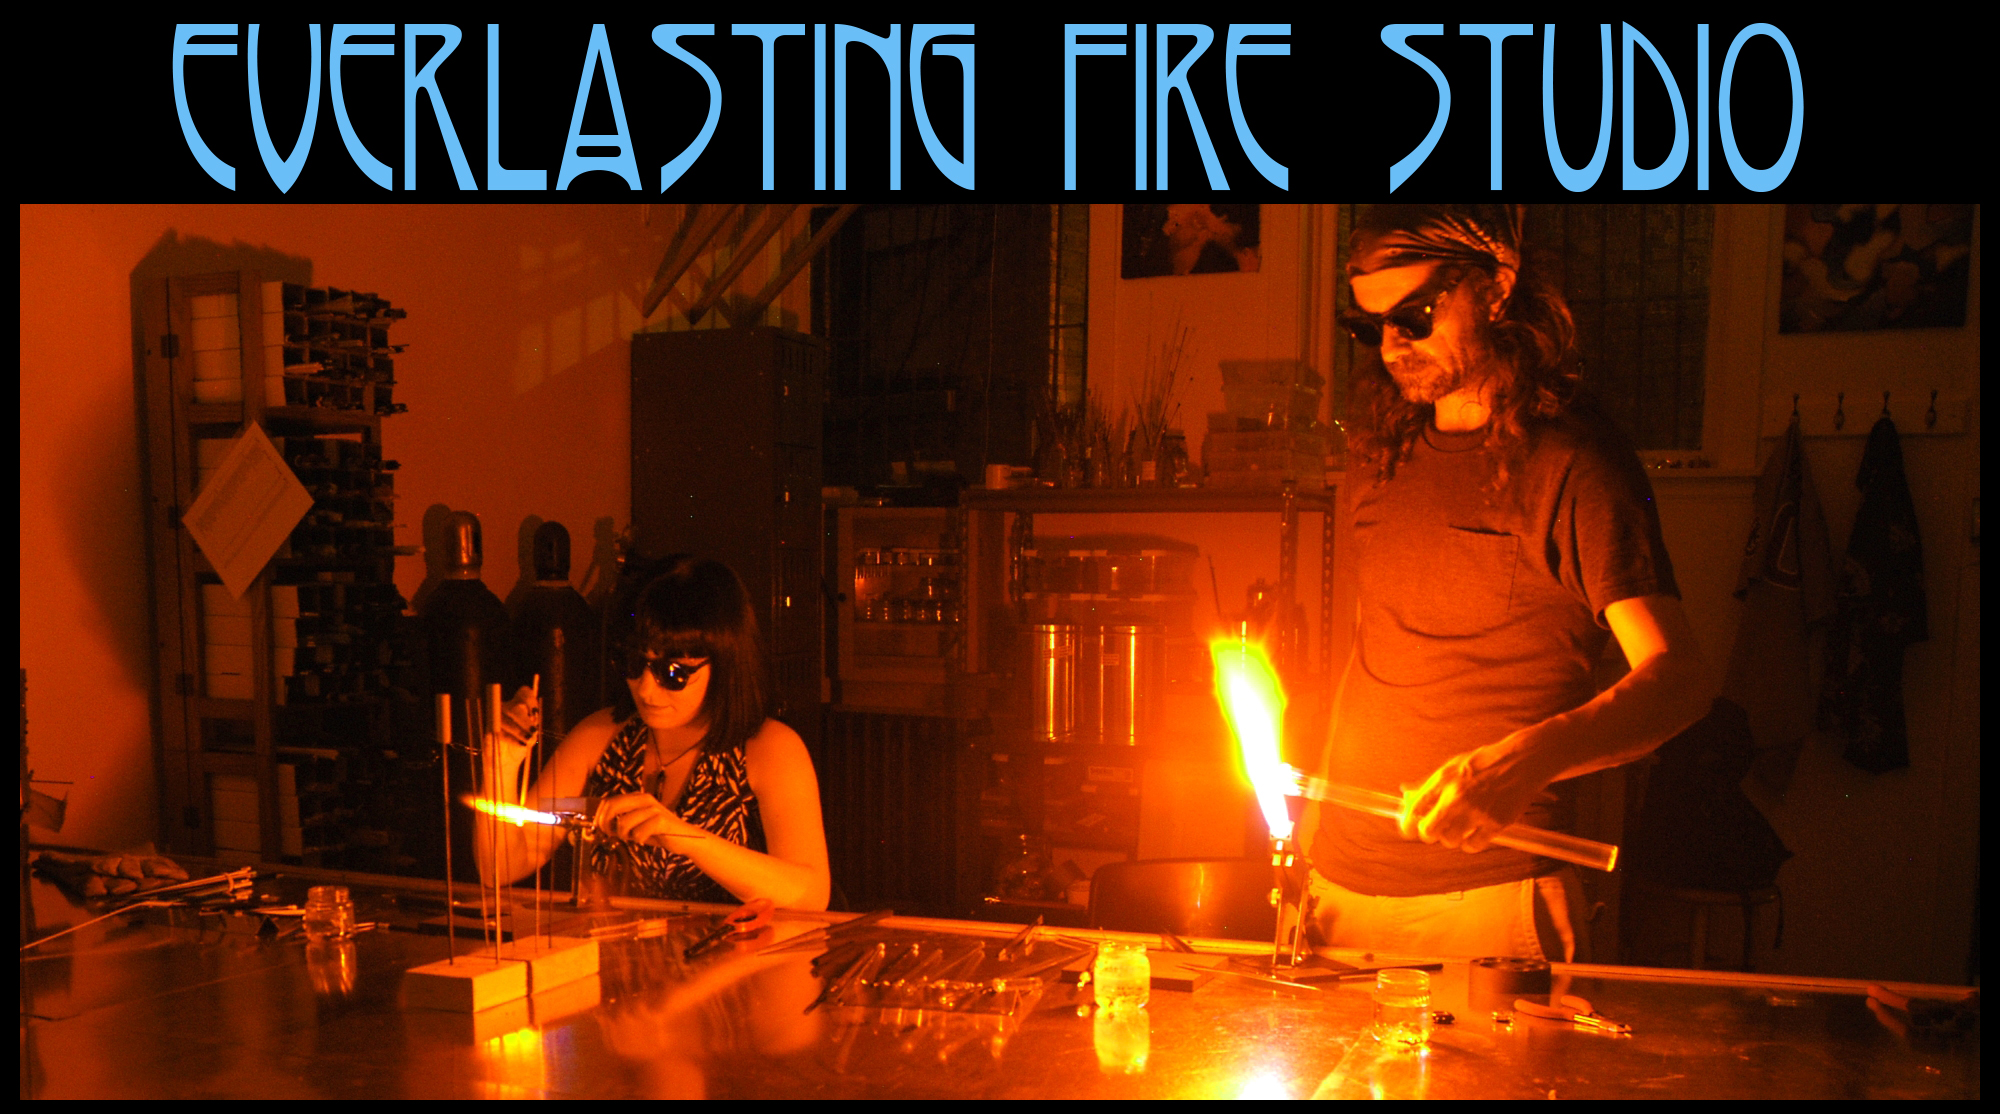 Everlasting Fire Studio